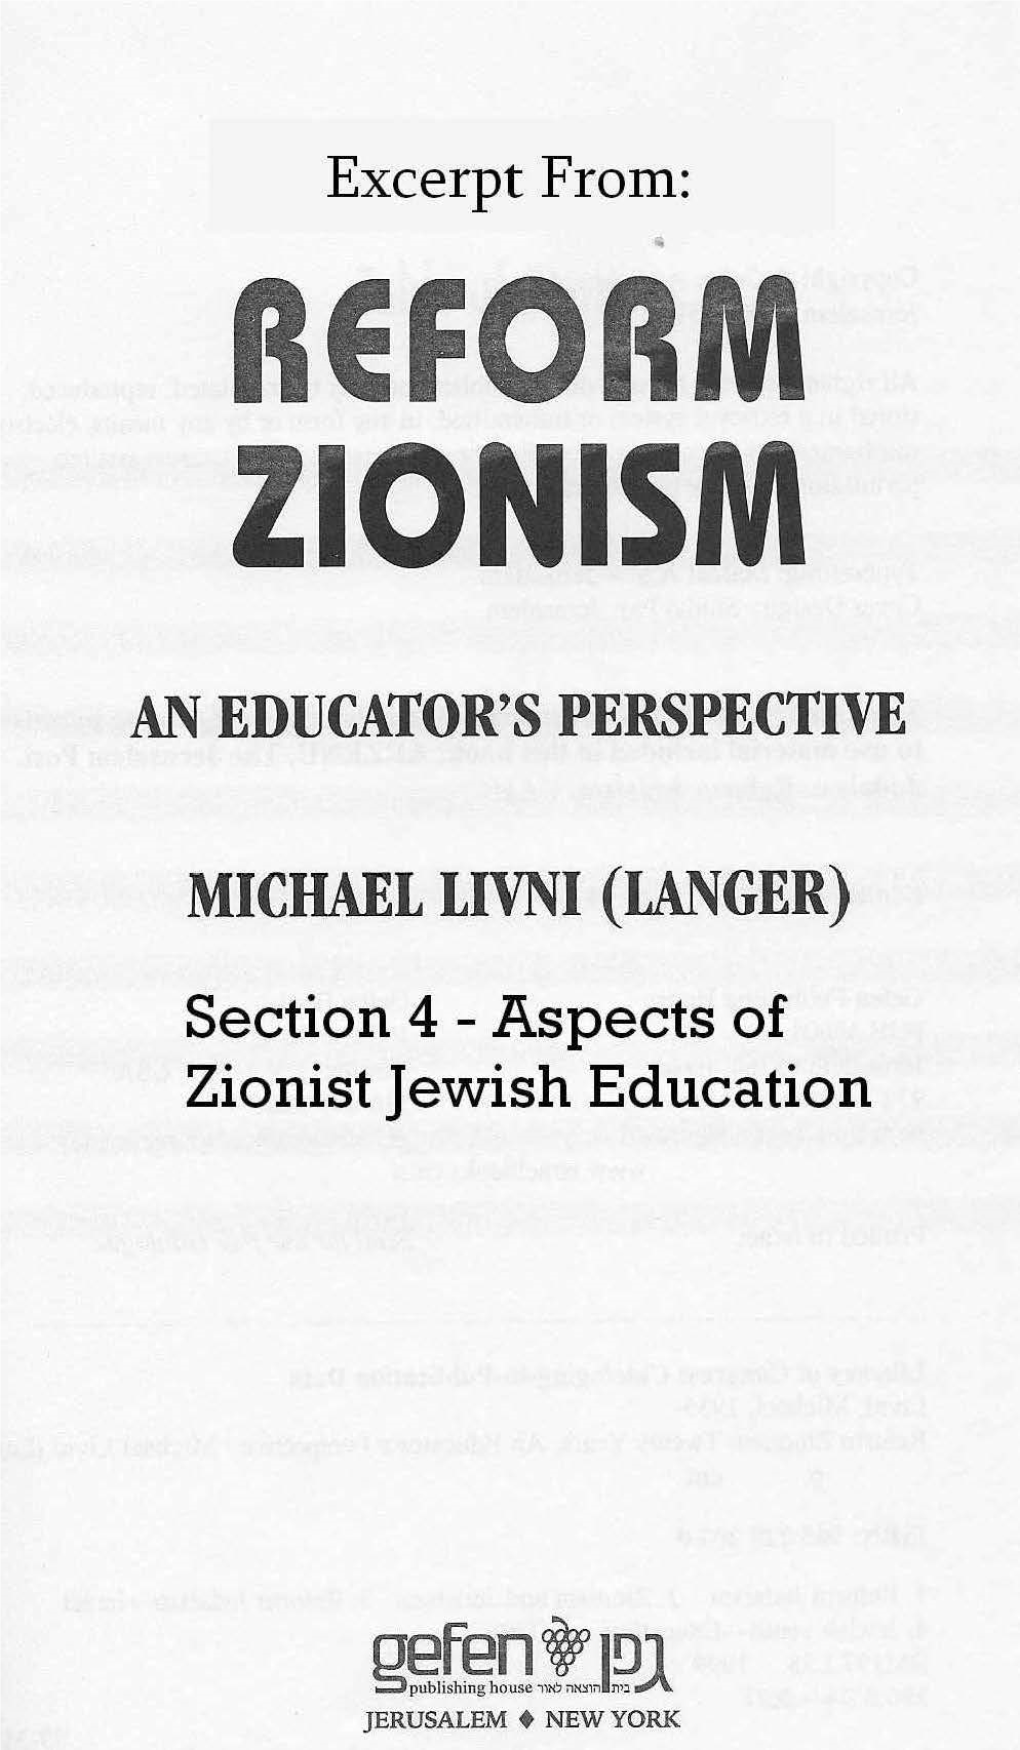 Aspects of Zionist Jewish Education